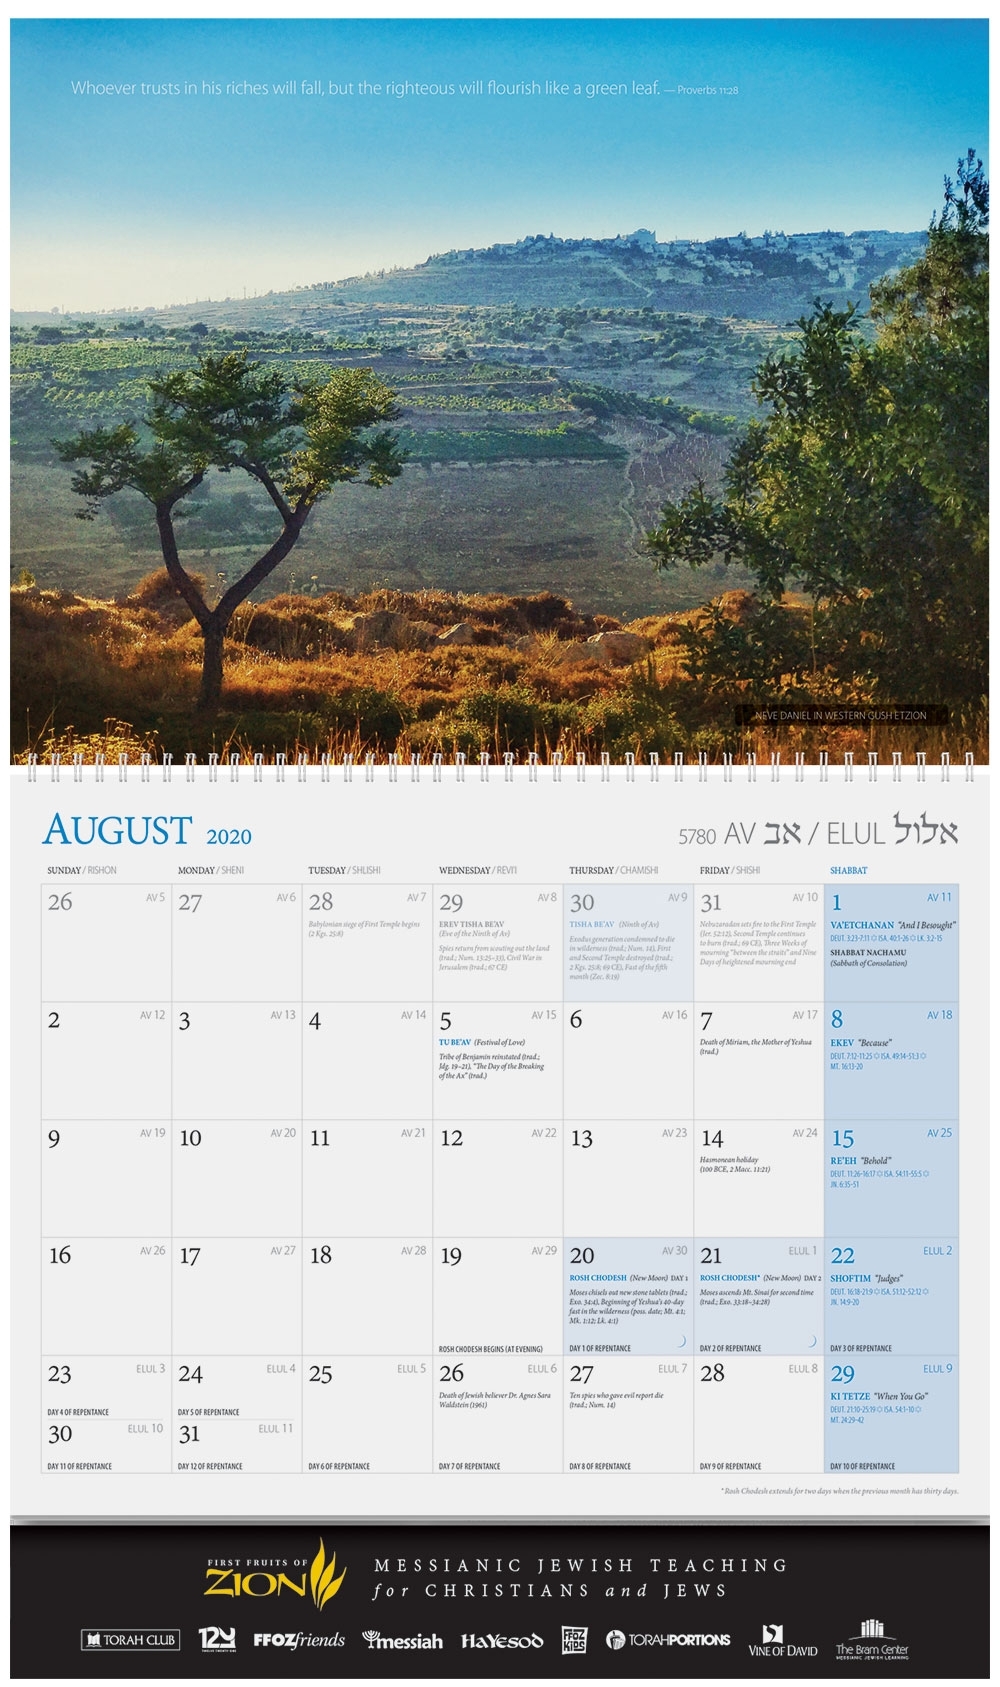 Eretz Yisrael / Land Of Israel Calendar regarding Weekly Torah Parsha Calendar For 2019/2020